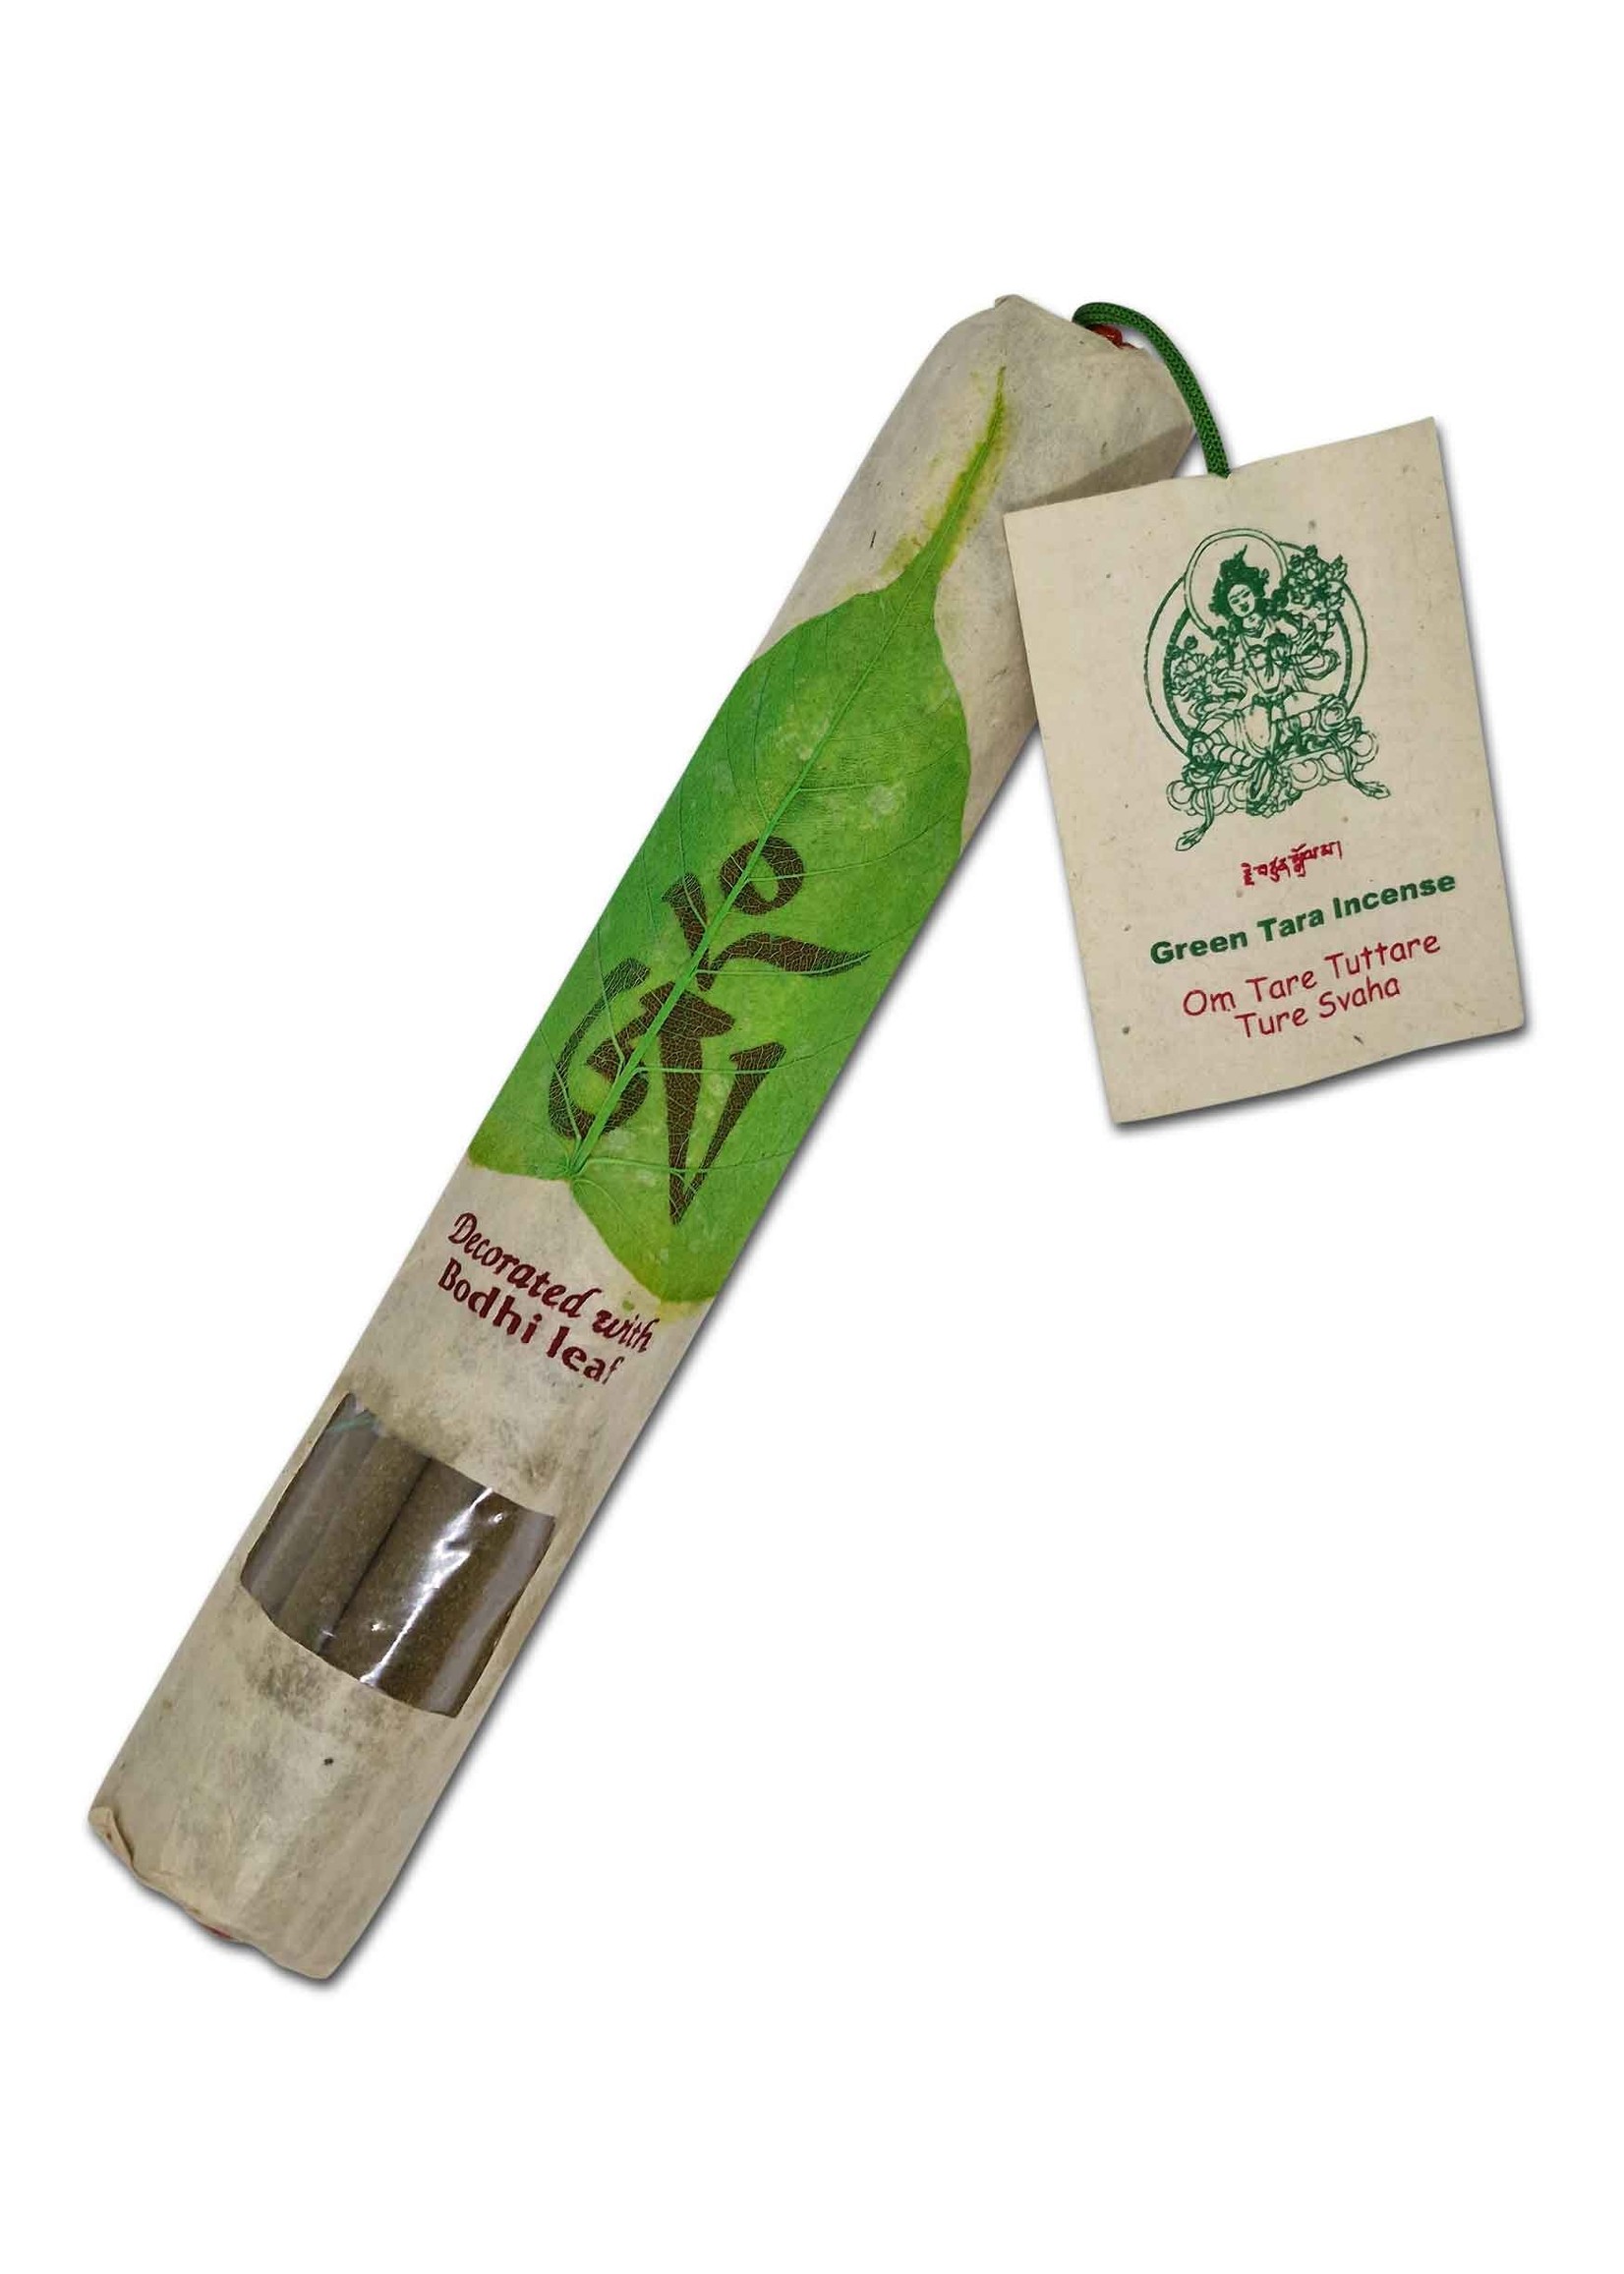 Tibetan Incense "Green Tara Incense" With Bodhi Leaf